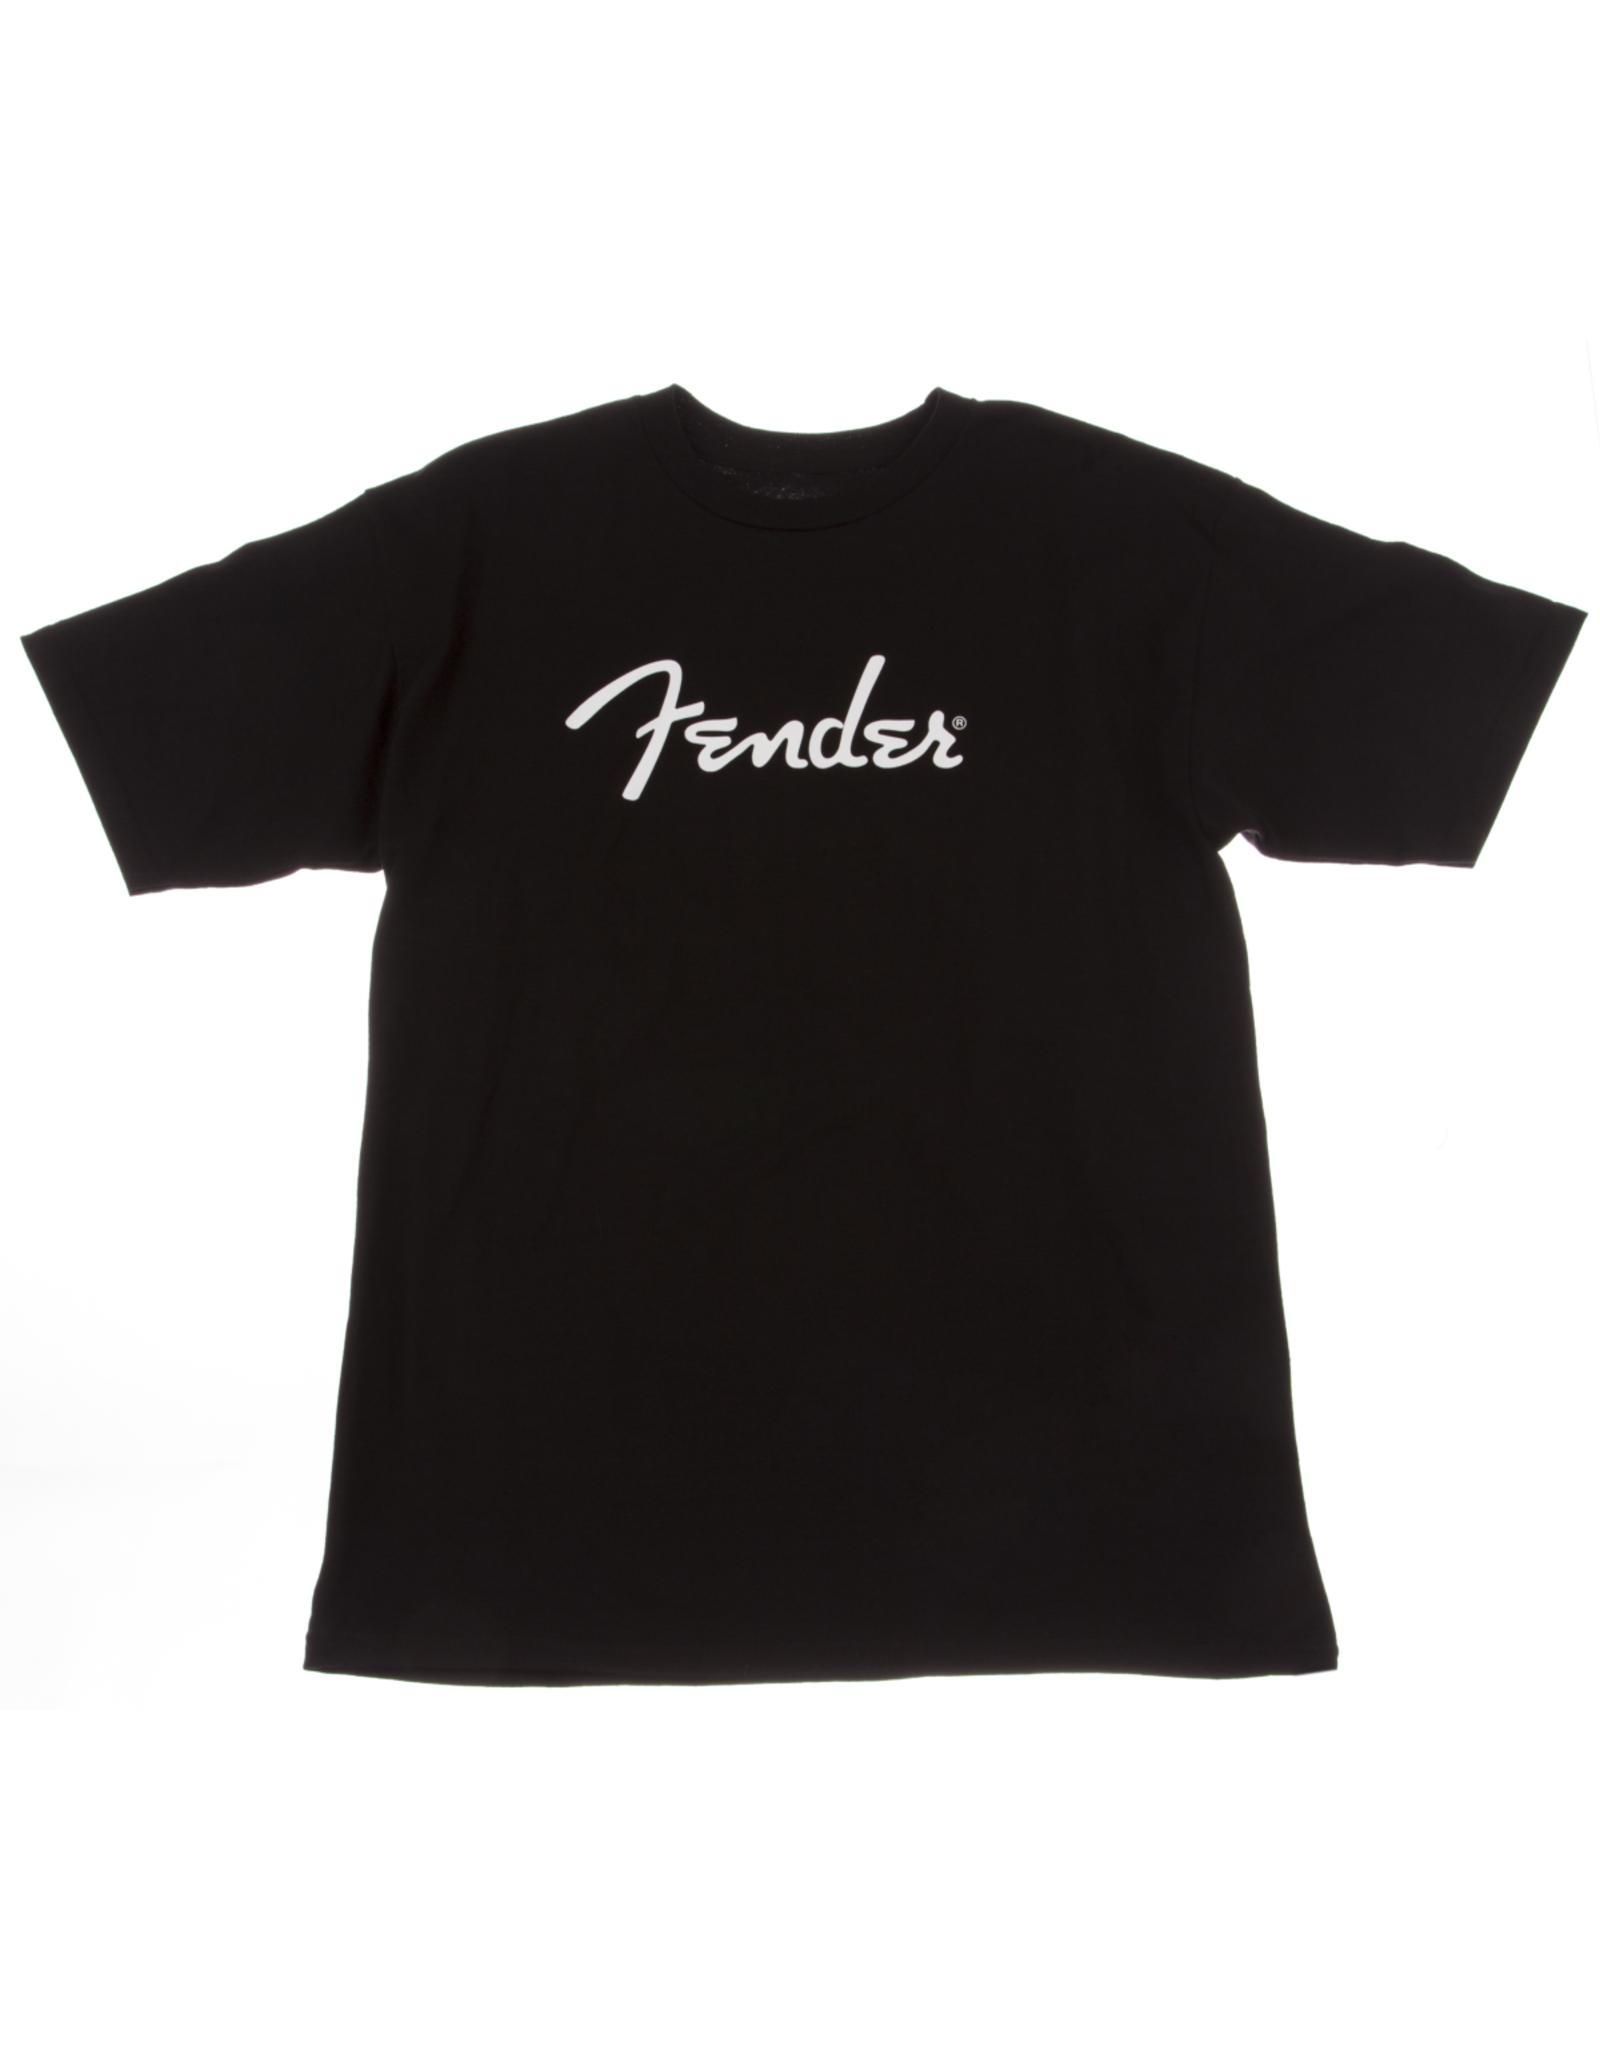 Fender Fender Spaghetti Logo T-Shirt, Black, XL